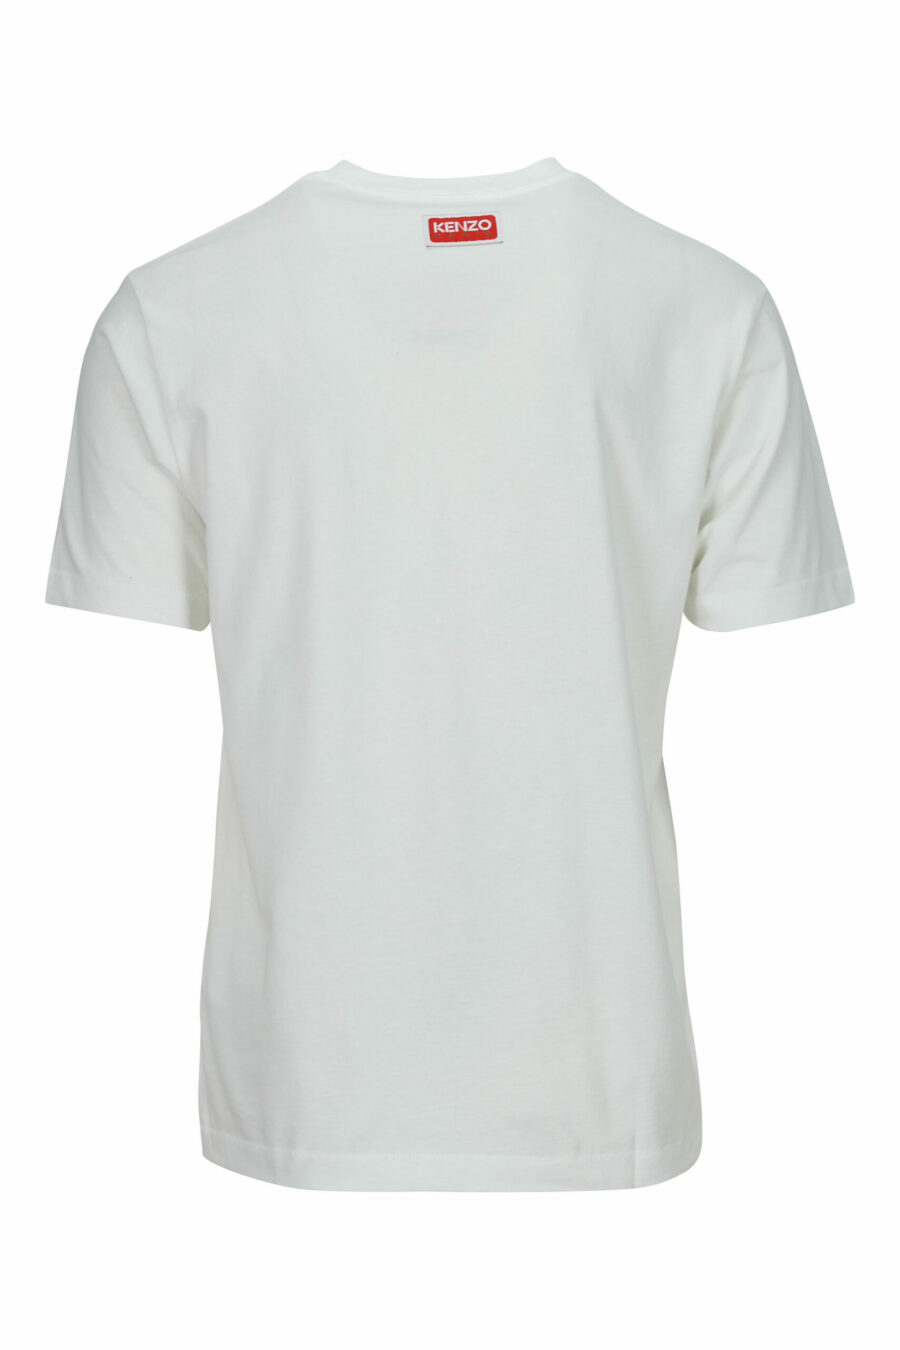 Camiseta blanca "oversize" logo pequeño tigre relieve - 3612230571716 1 scaled